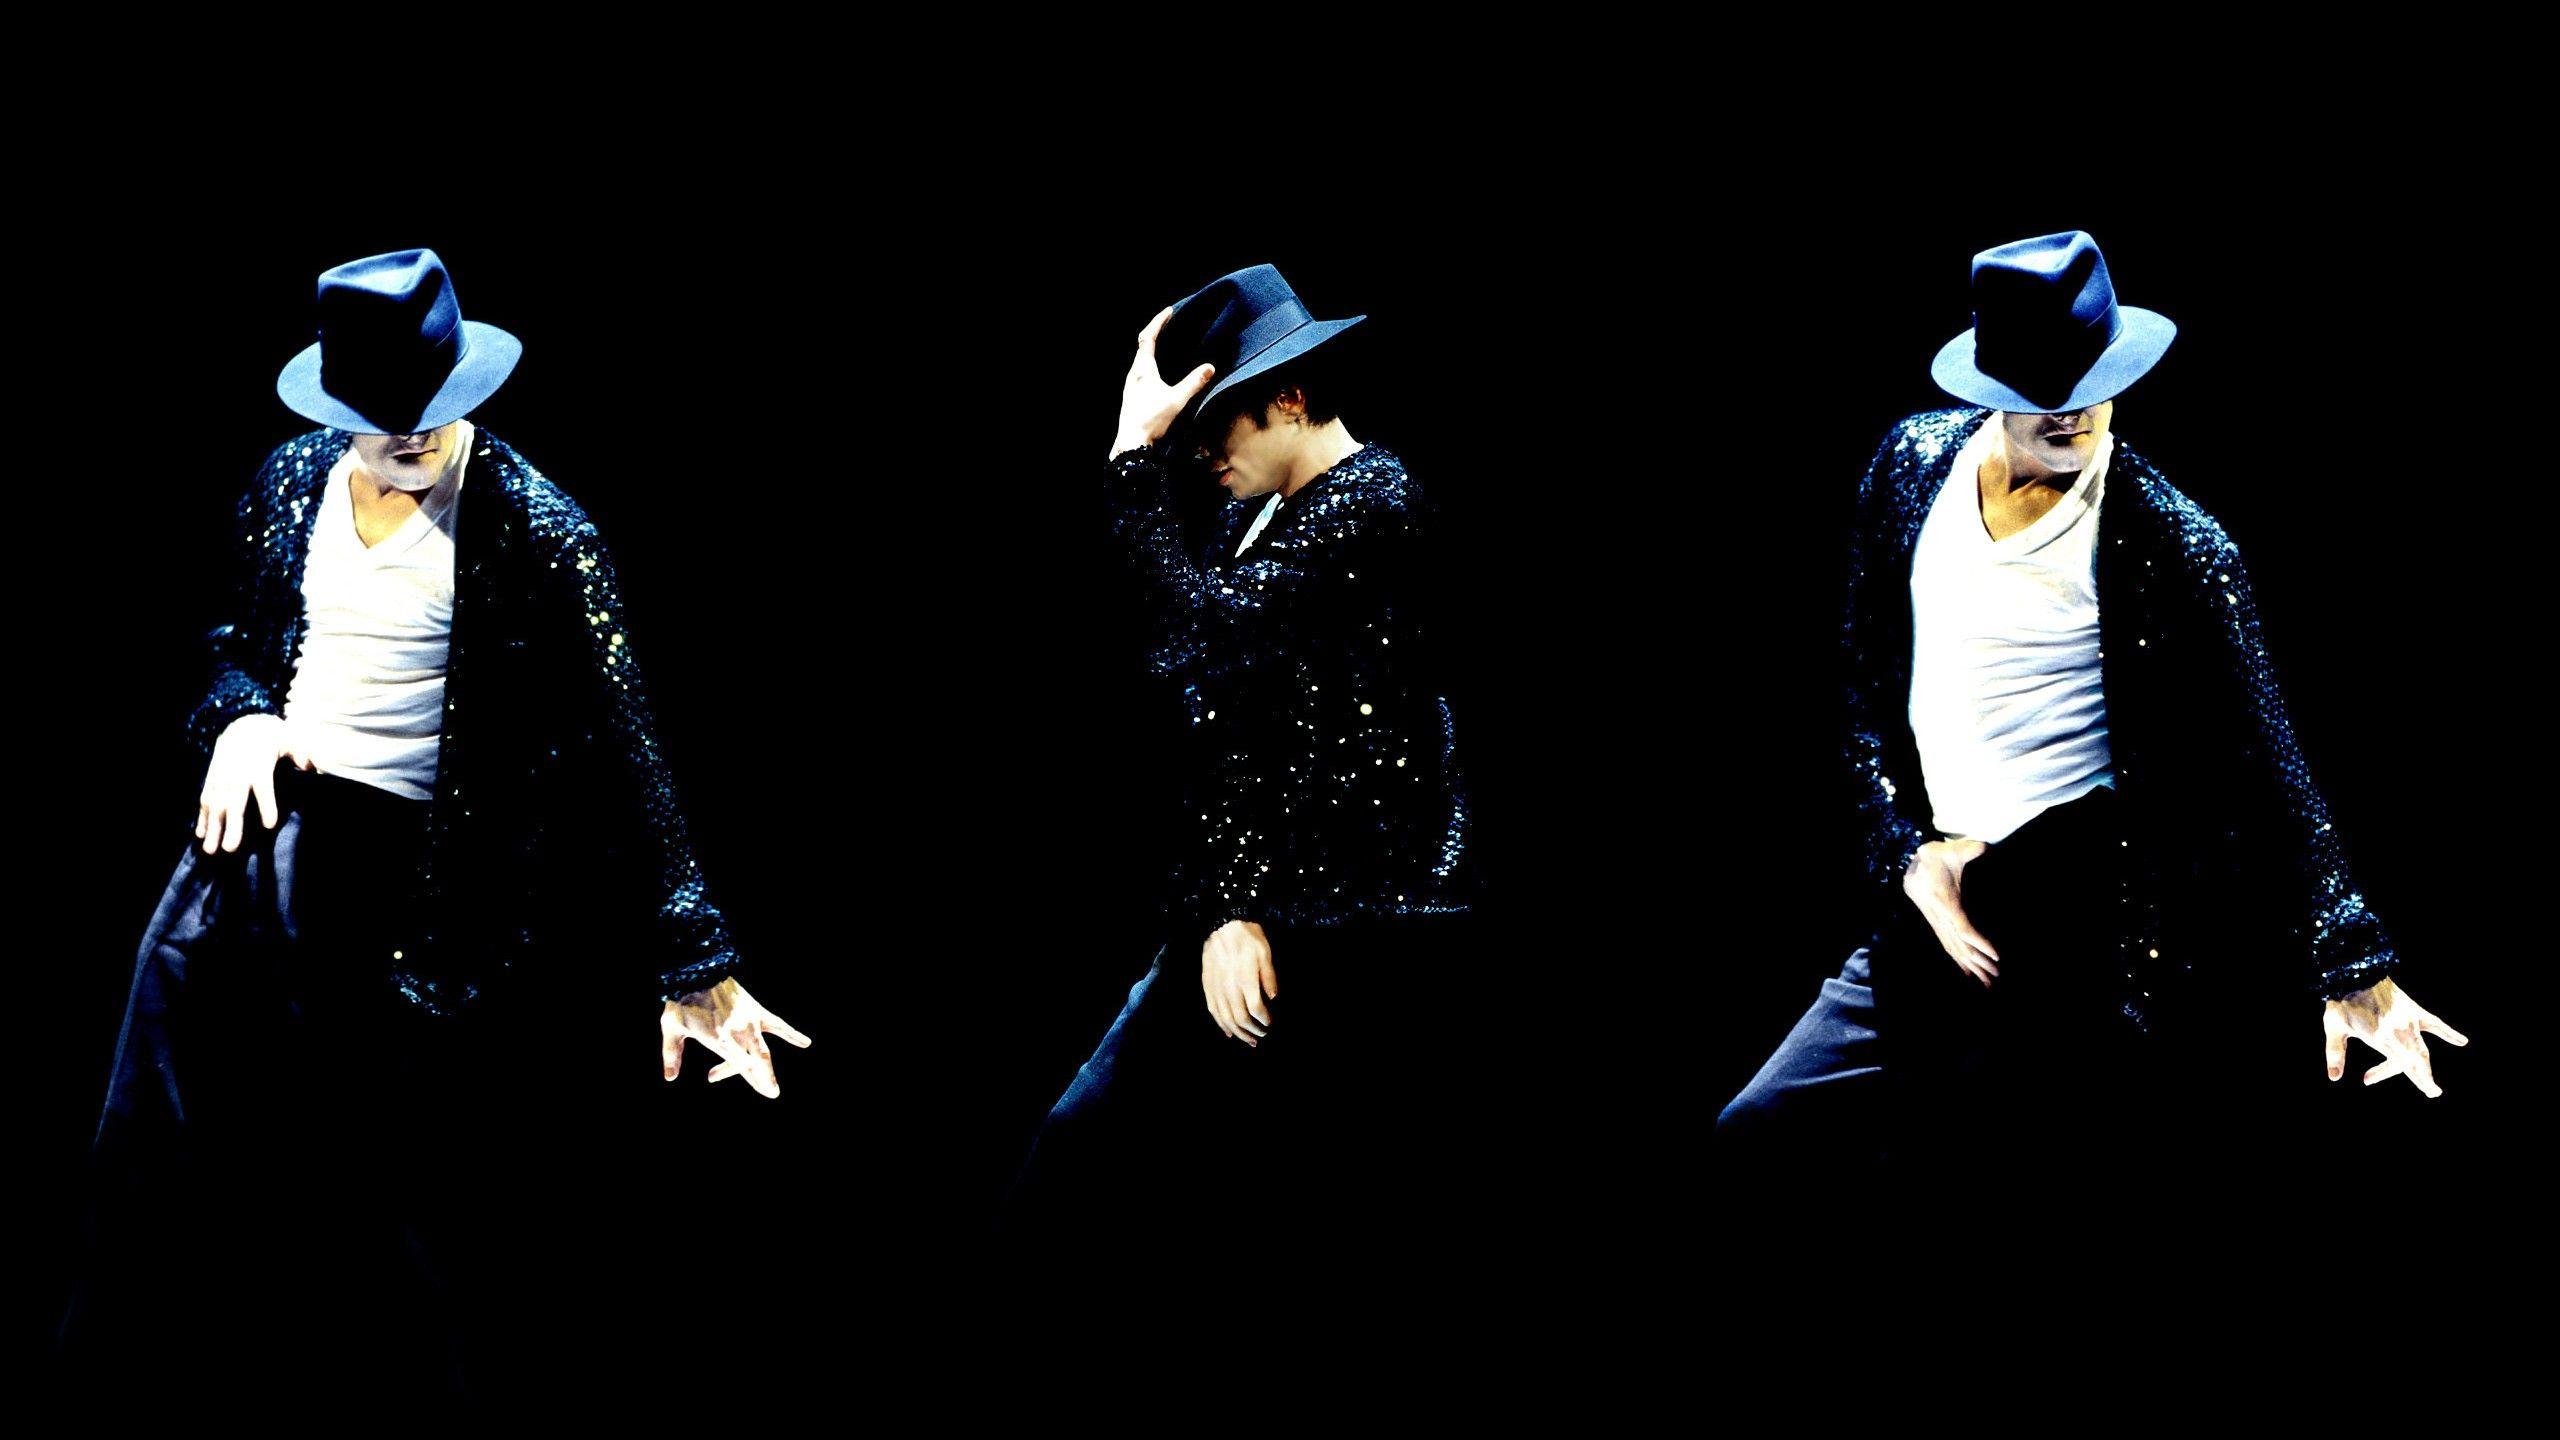 Michael Jackson Doing Dance, HD Celebrities, 4k Wallpaper, Image